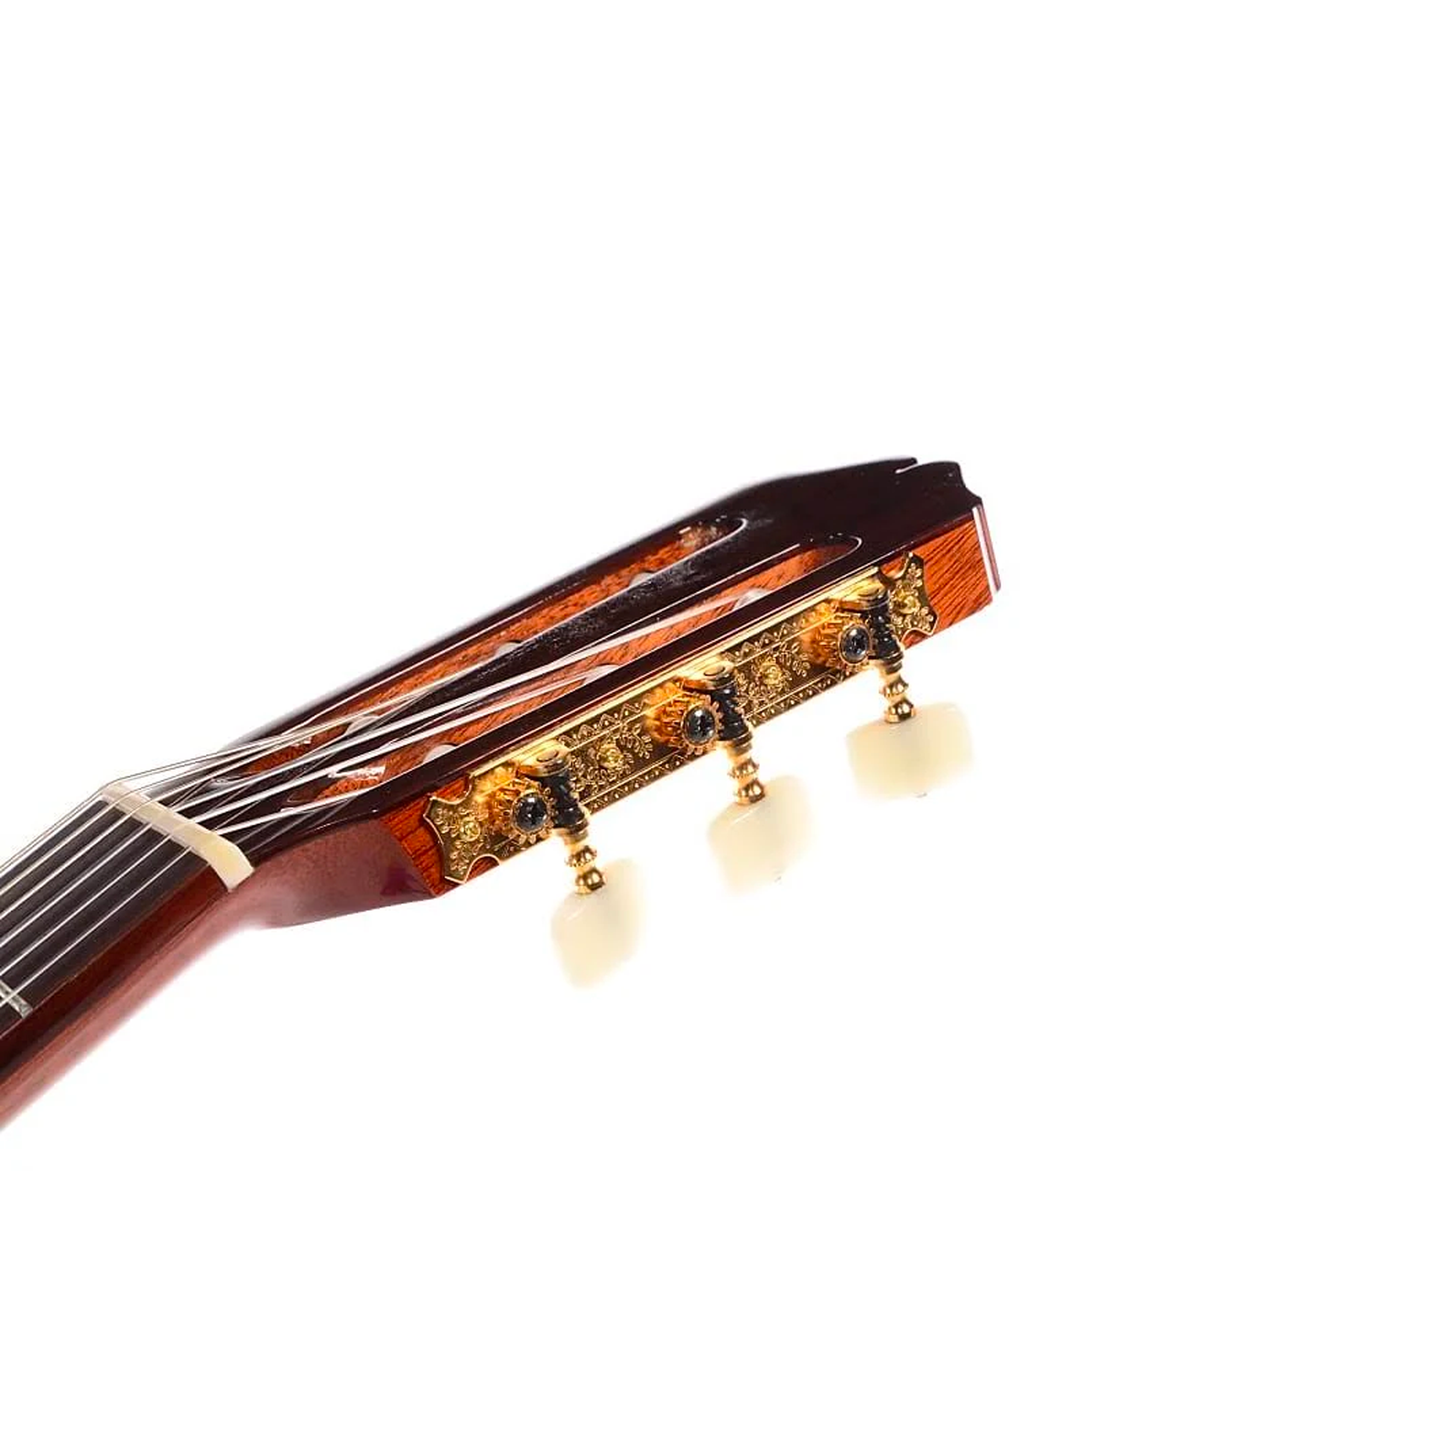 Alvarez CY75CE Yairi Standard Series Classical Acoustic-electric Guitar